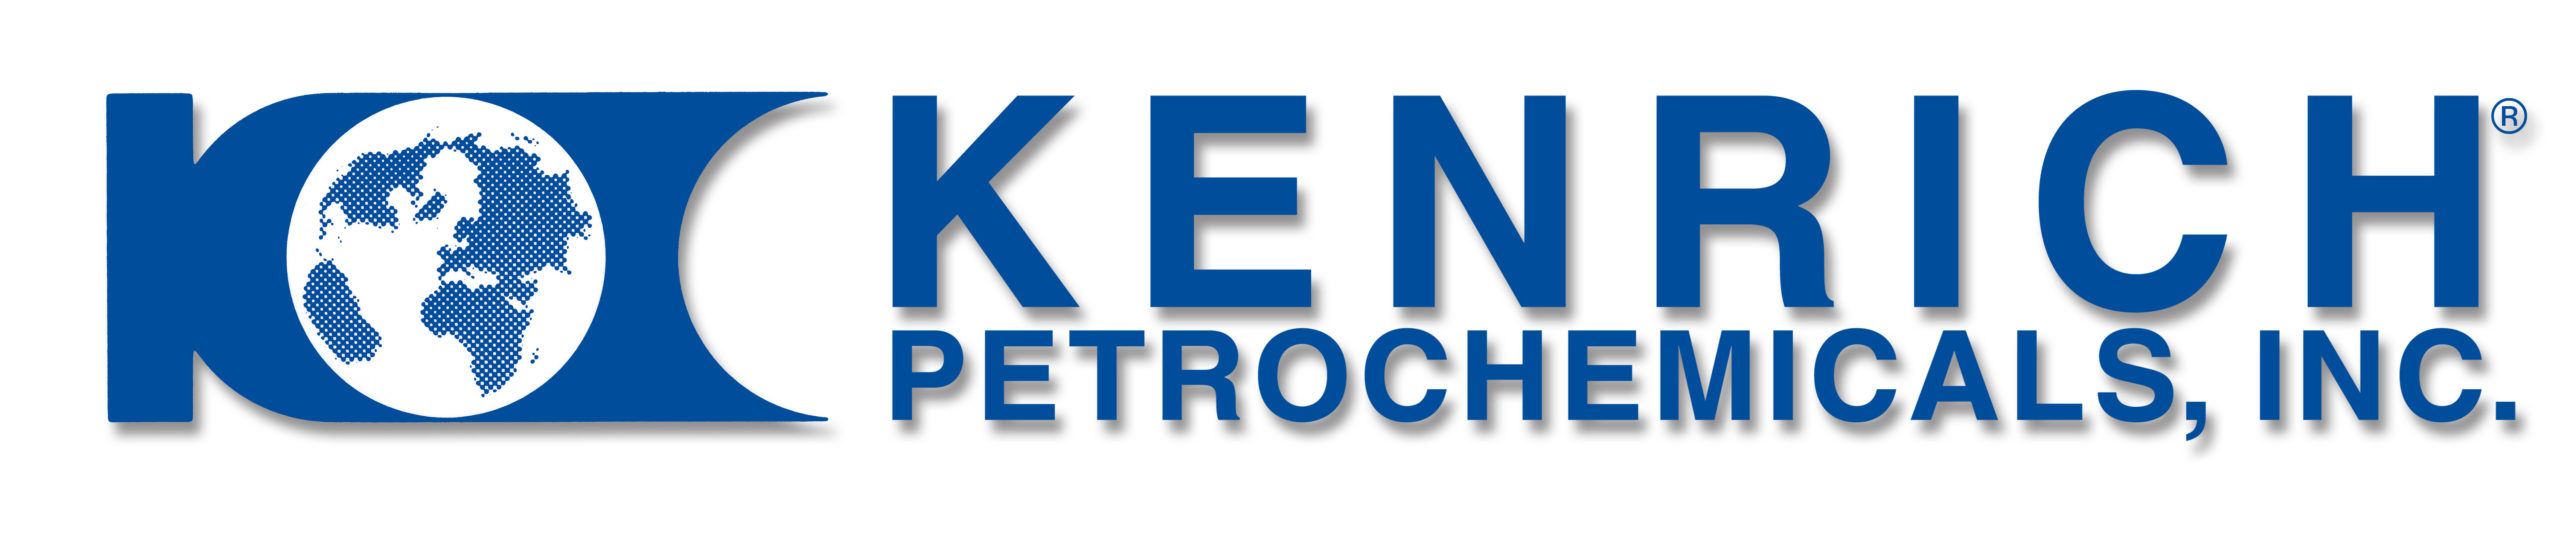 Kenrich Logo from Skyline - 3D JPEG